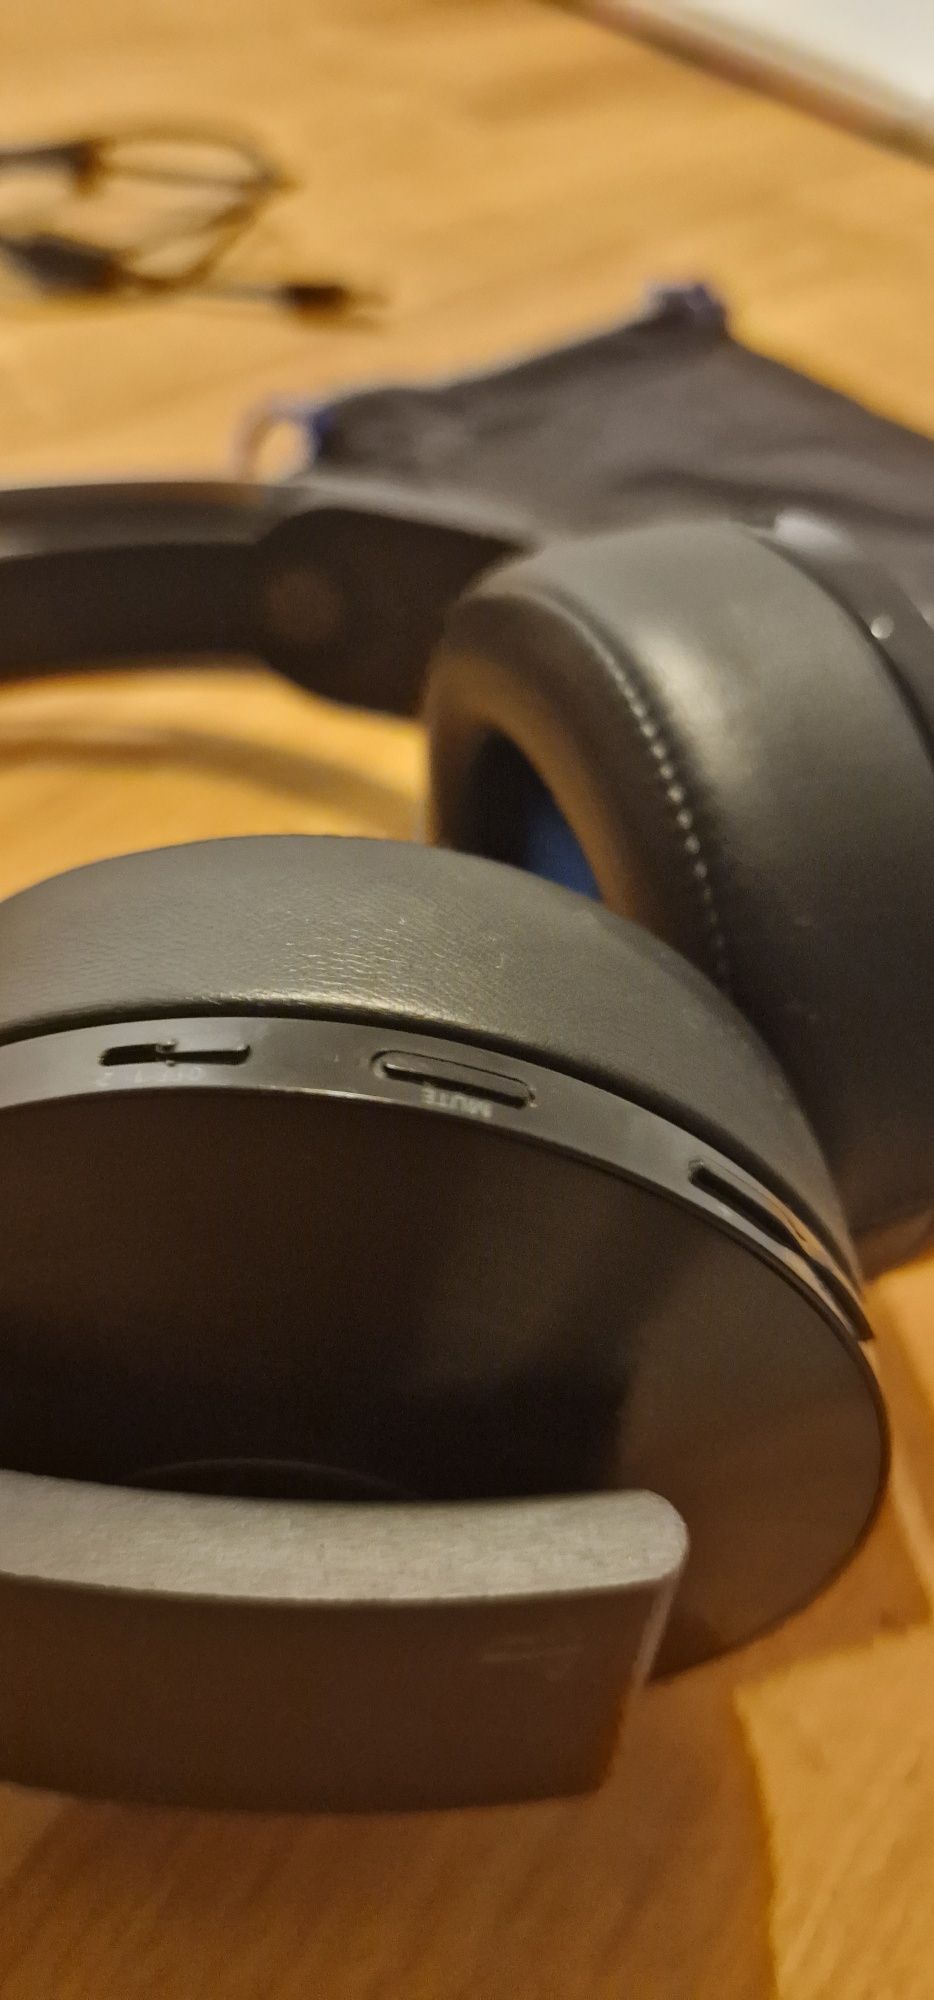 PlayStation Platinum Bluetooth Wireless Headset